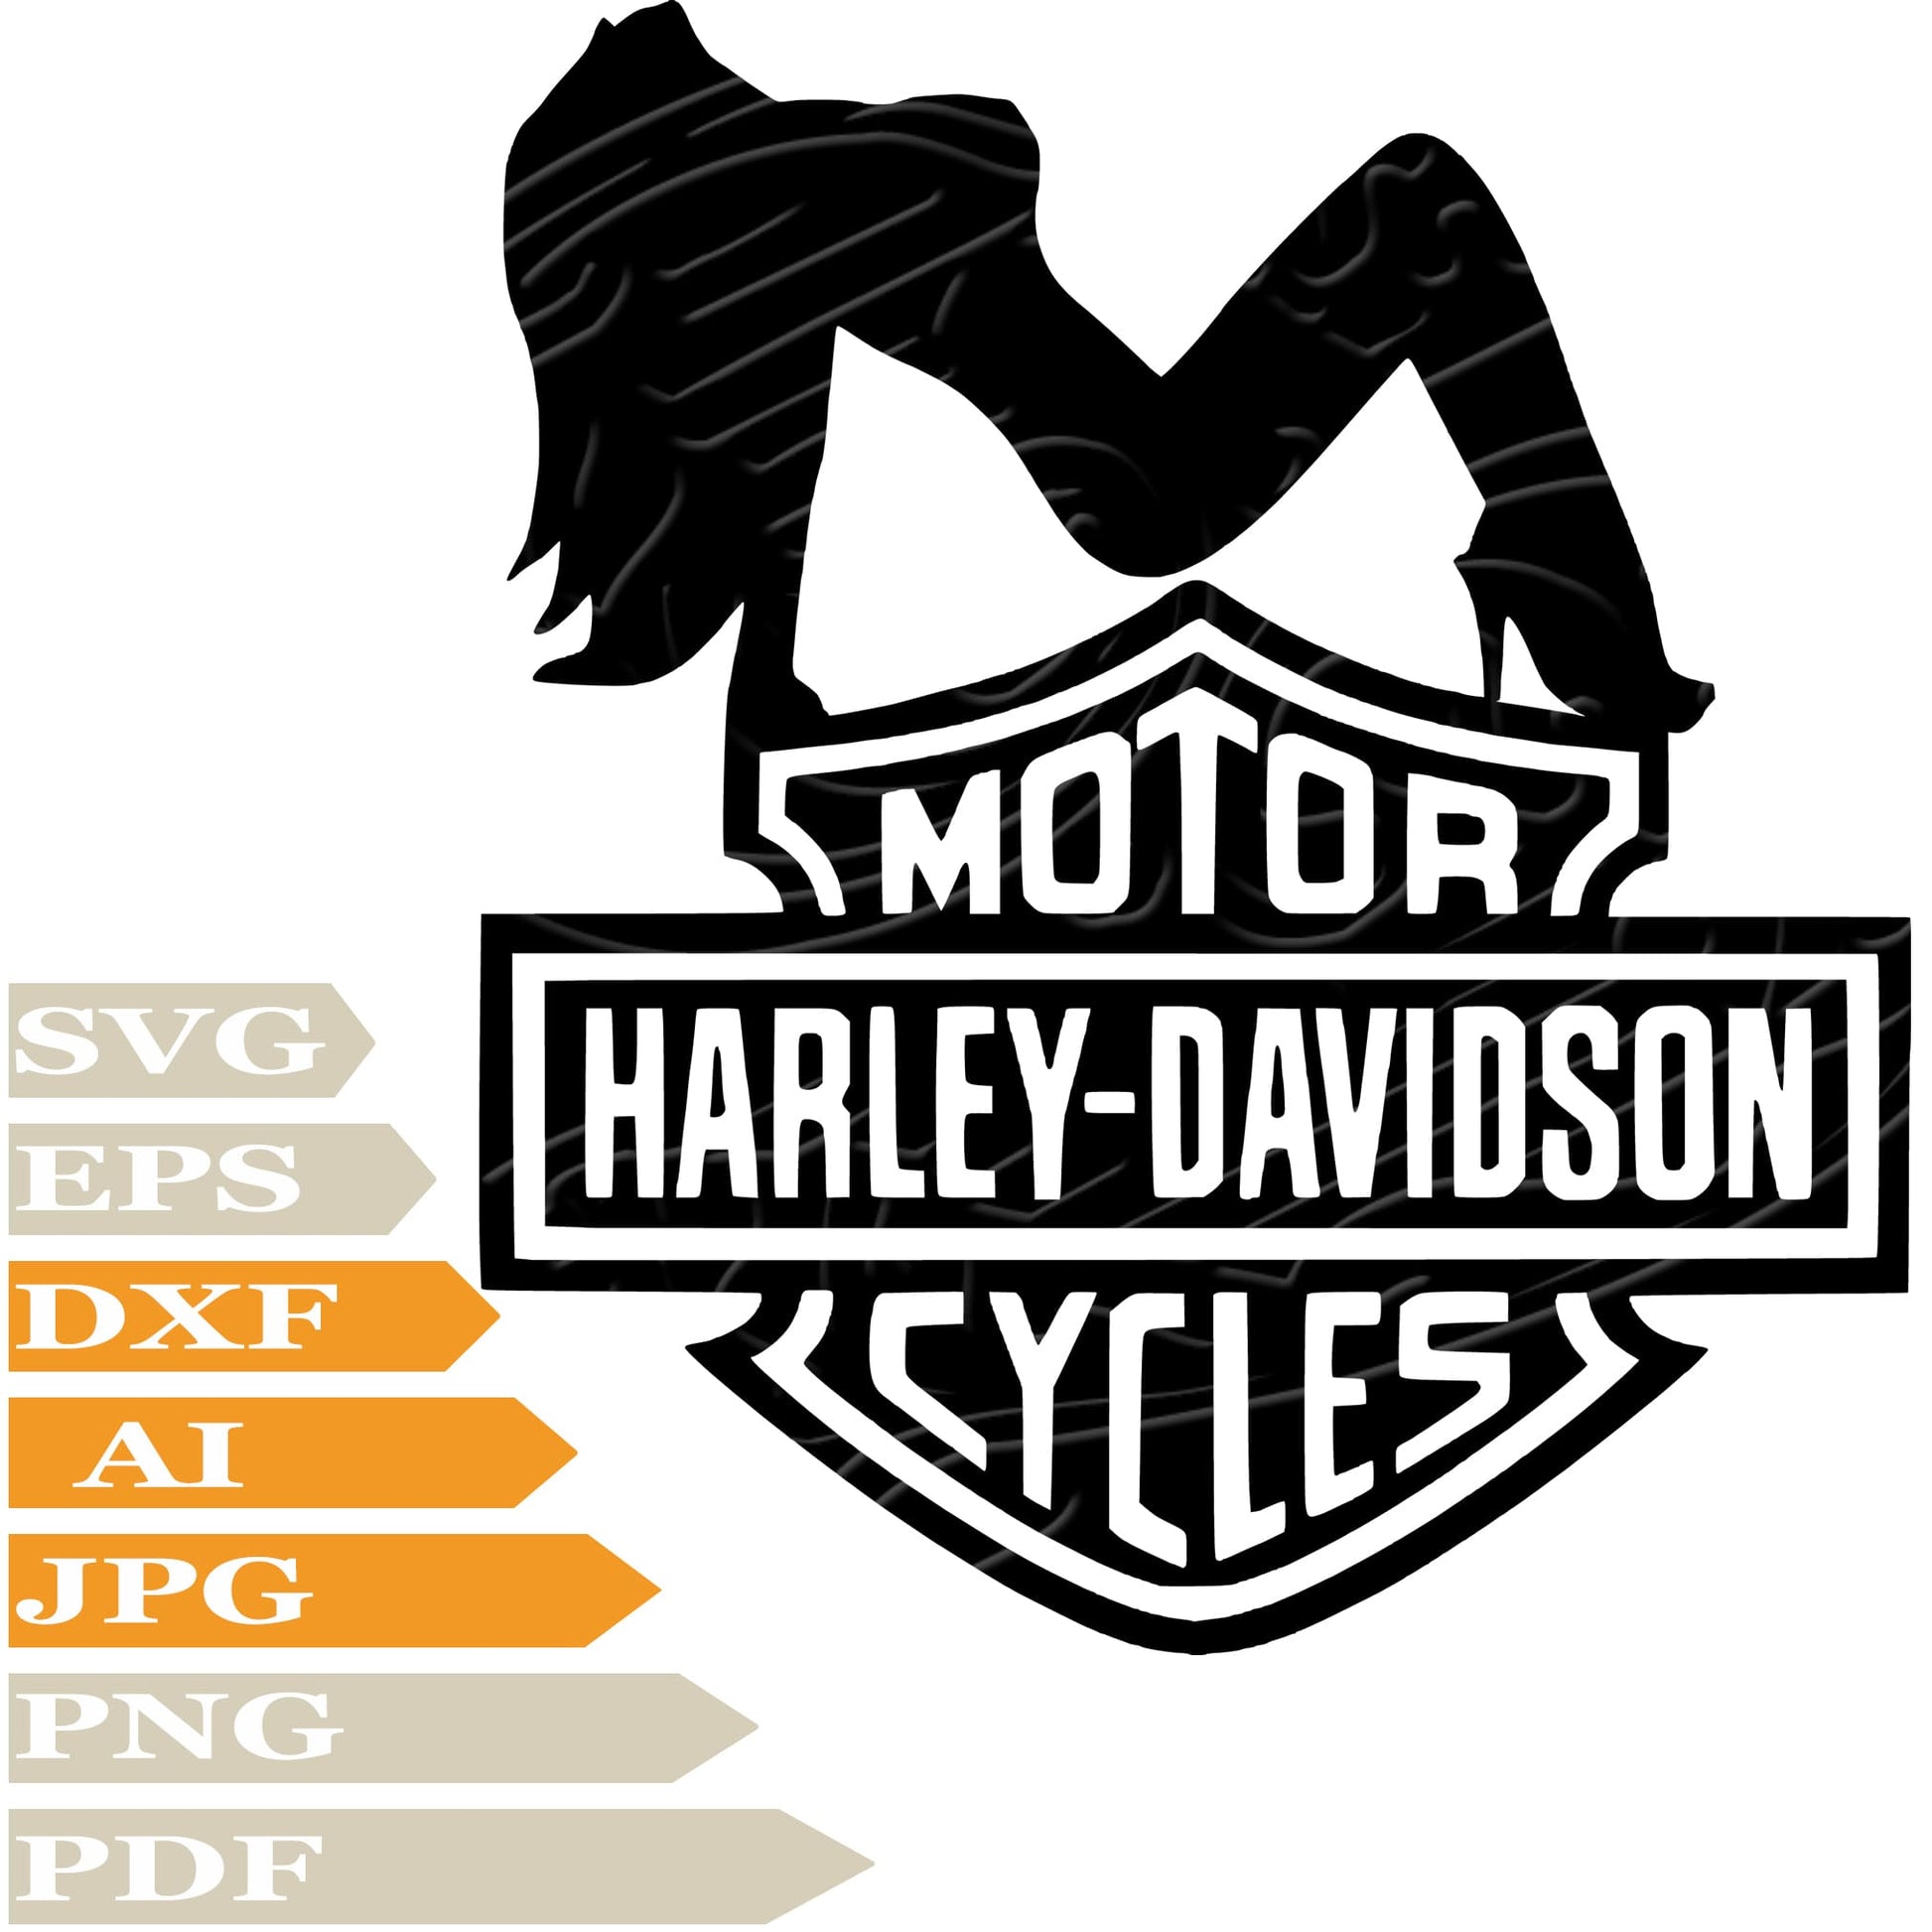 Harley Davidson Logo SVG File, Girl Harley Davidson SVG Design, Harley-Davidson SVG, Girl Harley Davidson Digital Vector, PNG, For Cricut, Clipart, Cut File, Print, For Tattoo, T-Shirt, Silhouette